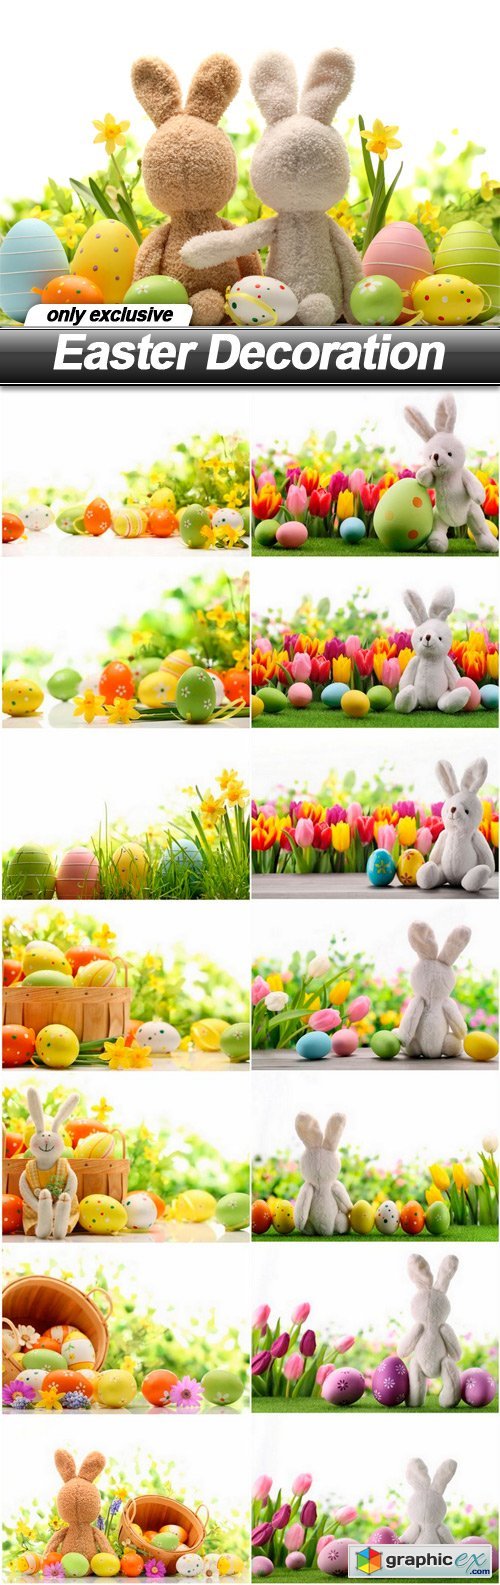 Easter Decoration - 15 UHQ JPEG